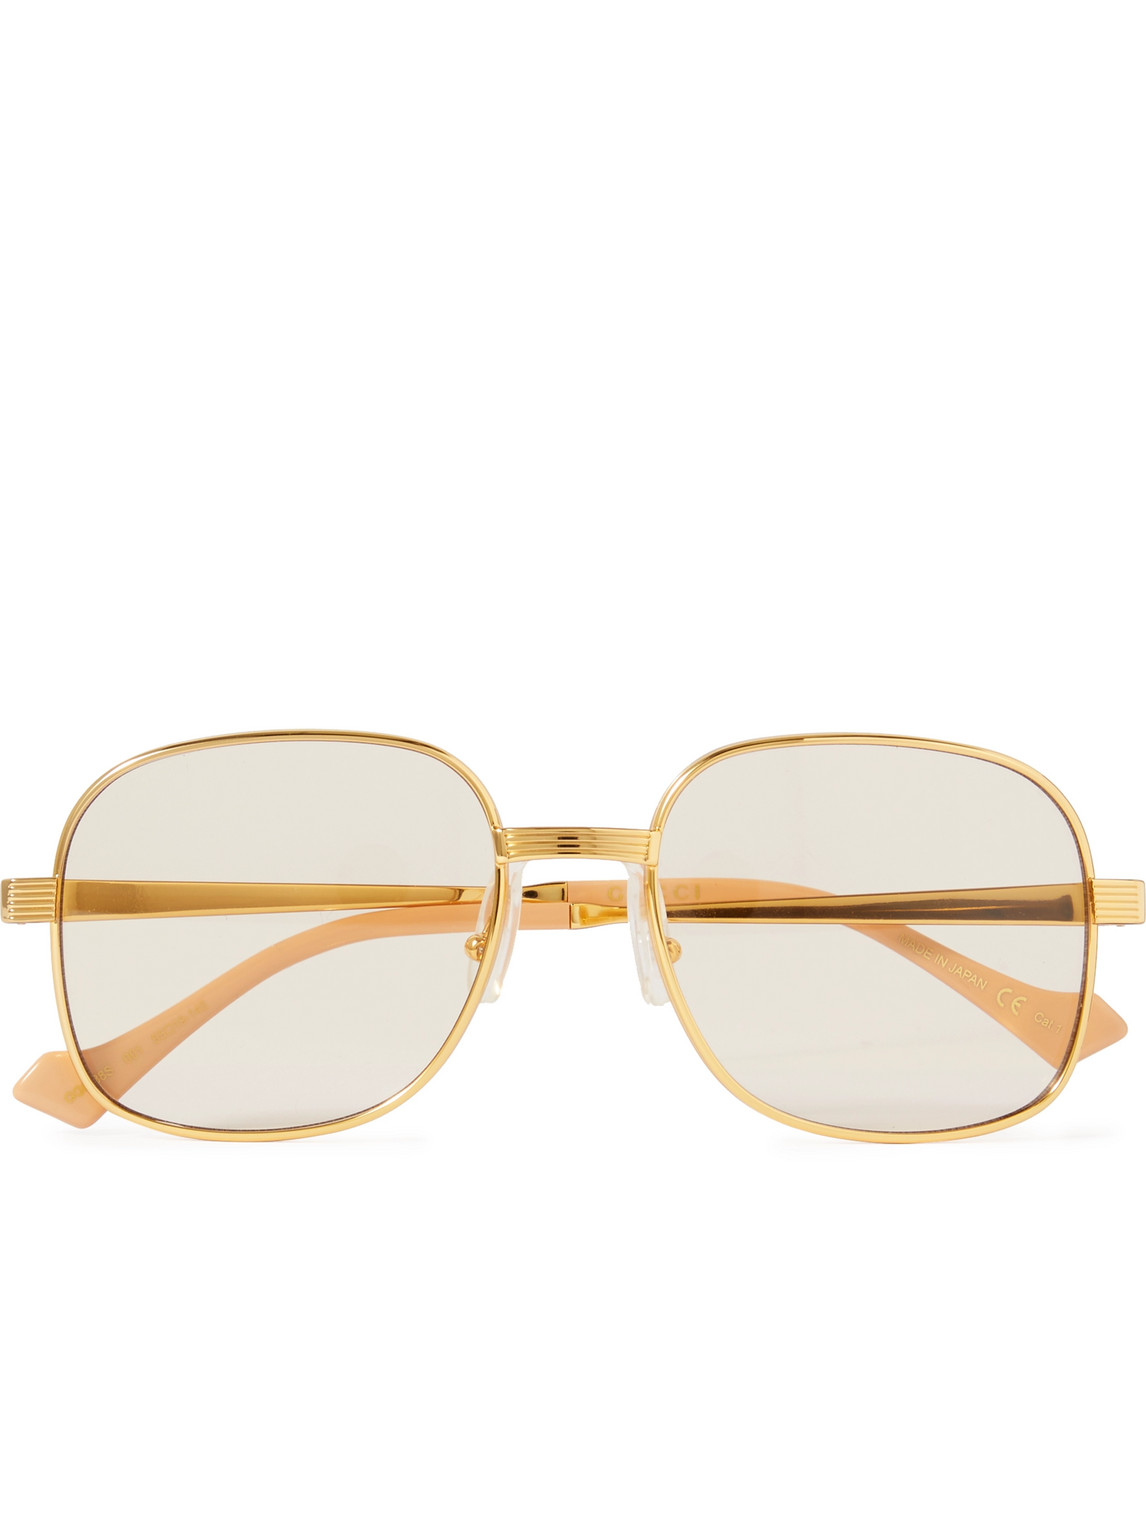 Gucci Eyewear - Round-Frame Gold-Tone Optical Glasses - Men - Gold for Men